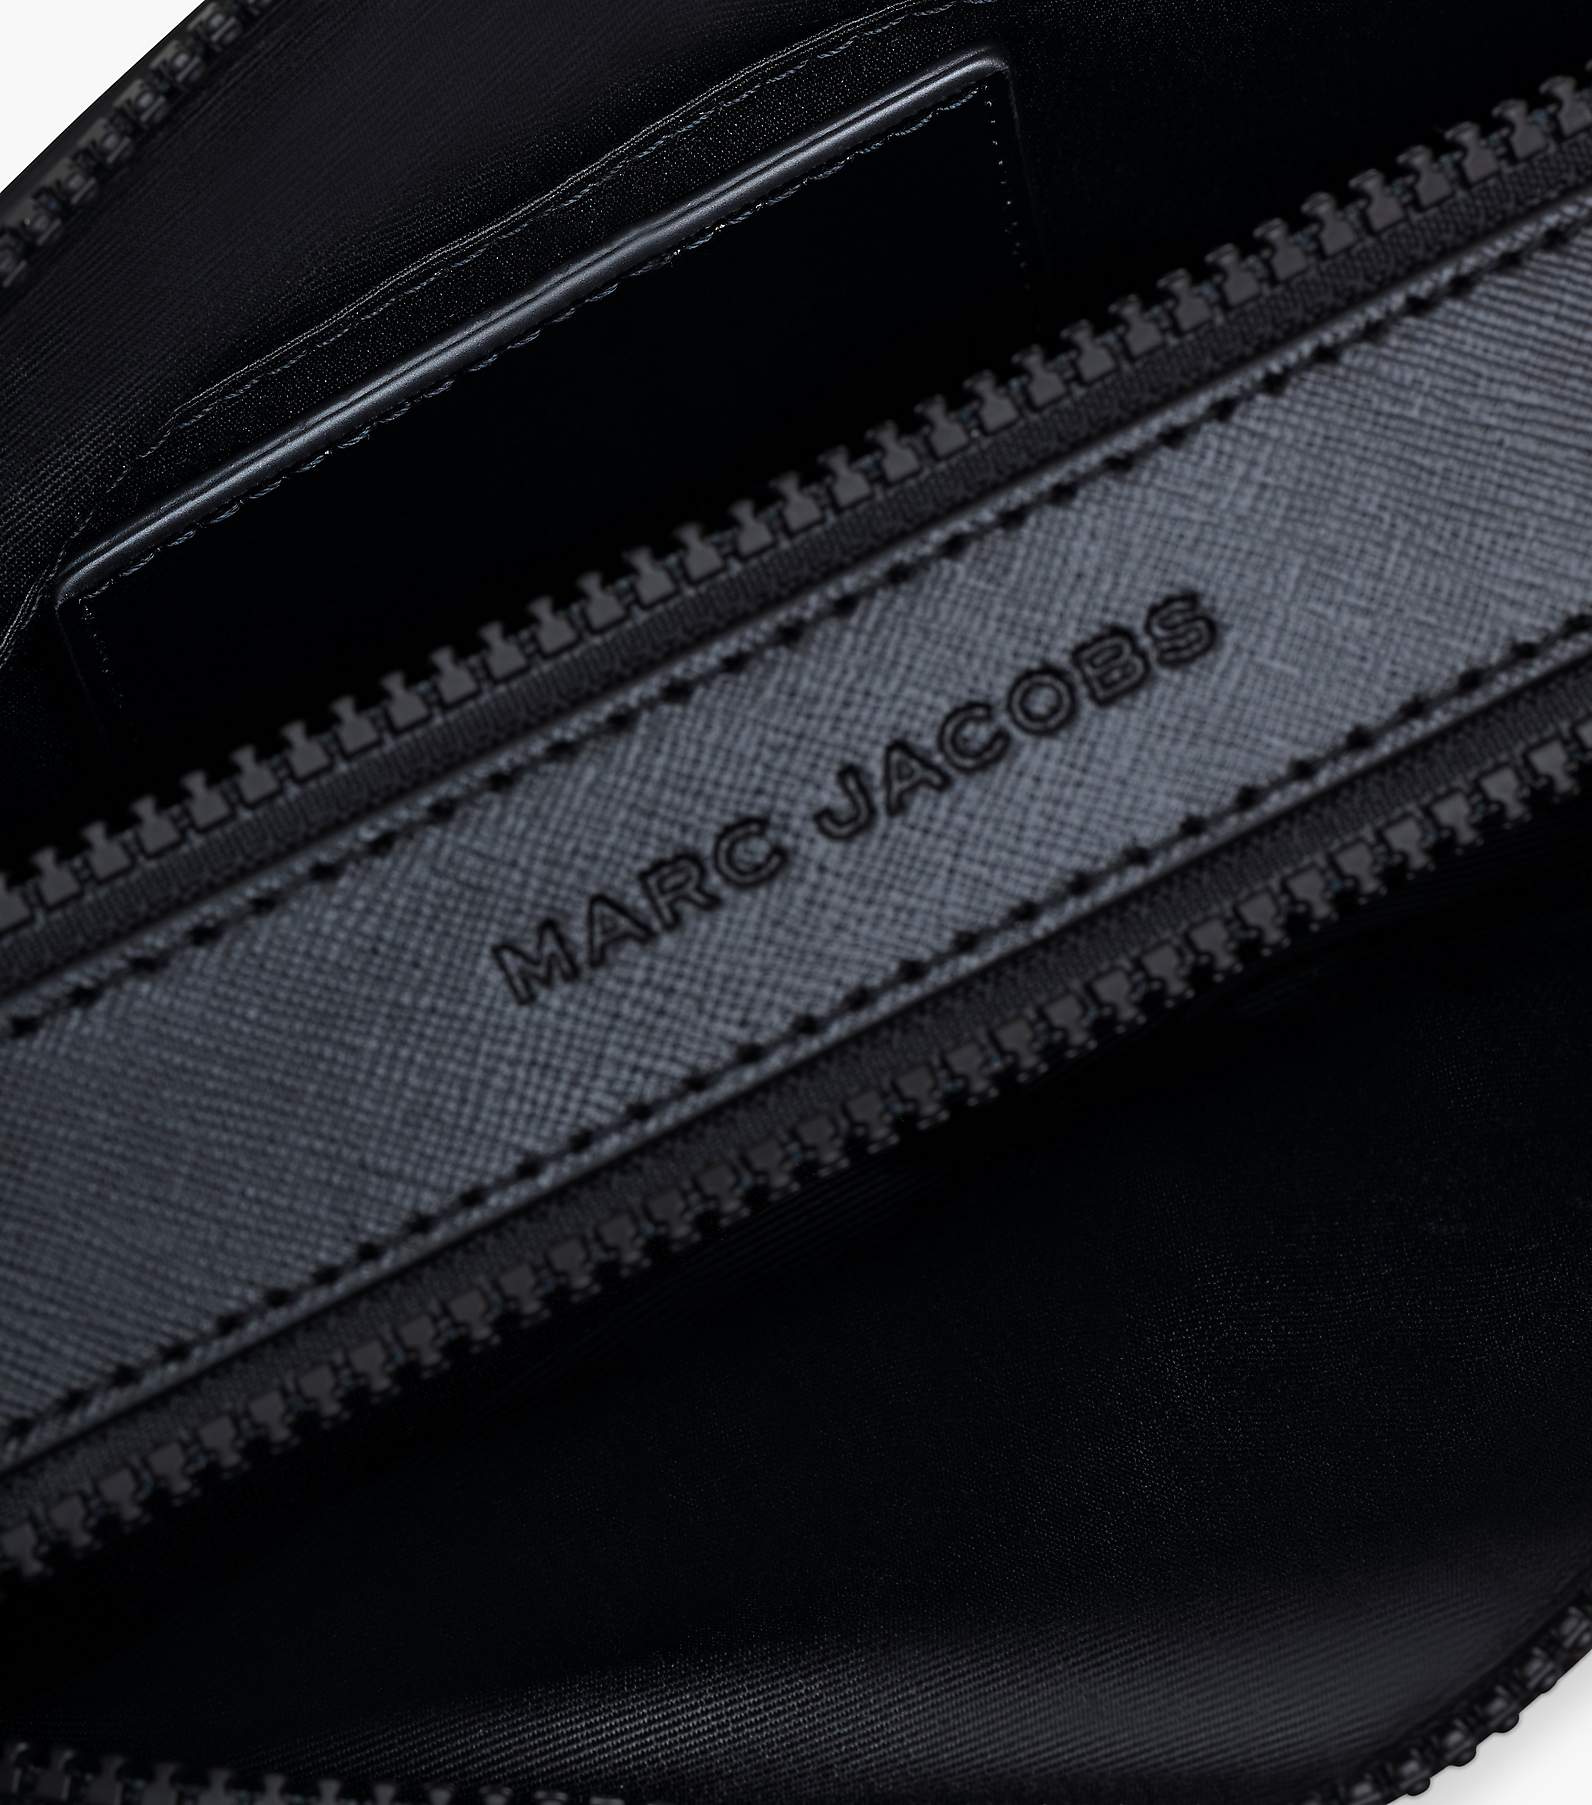 Marc Jacobs The Snapshot DTM Bag